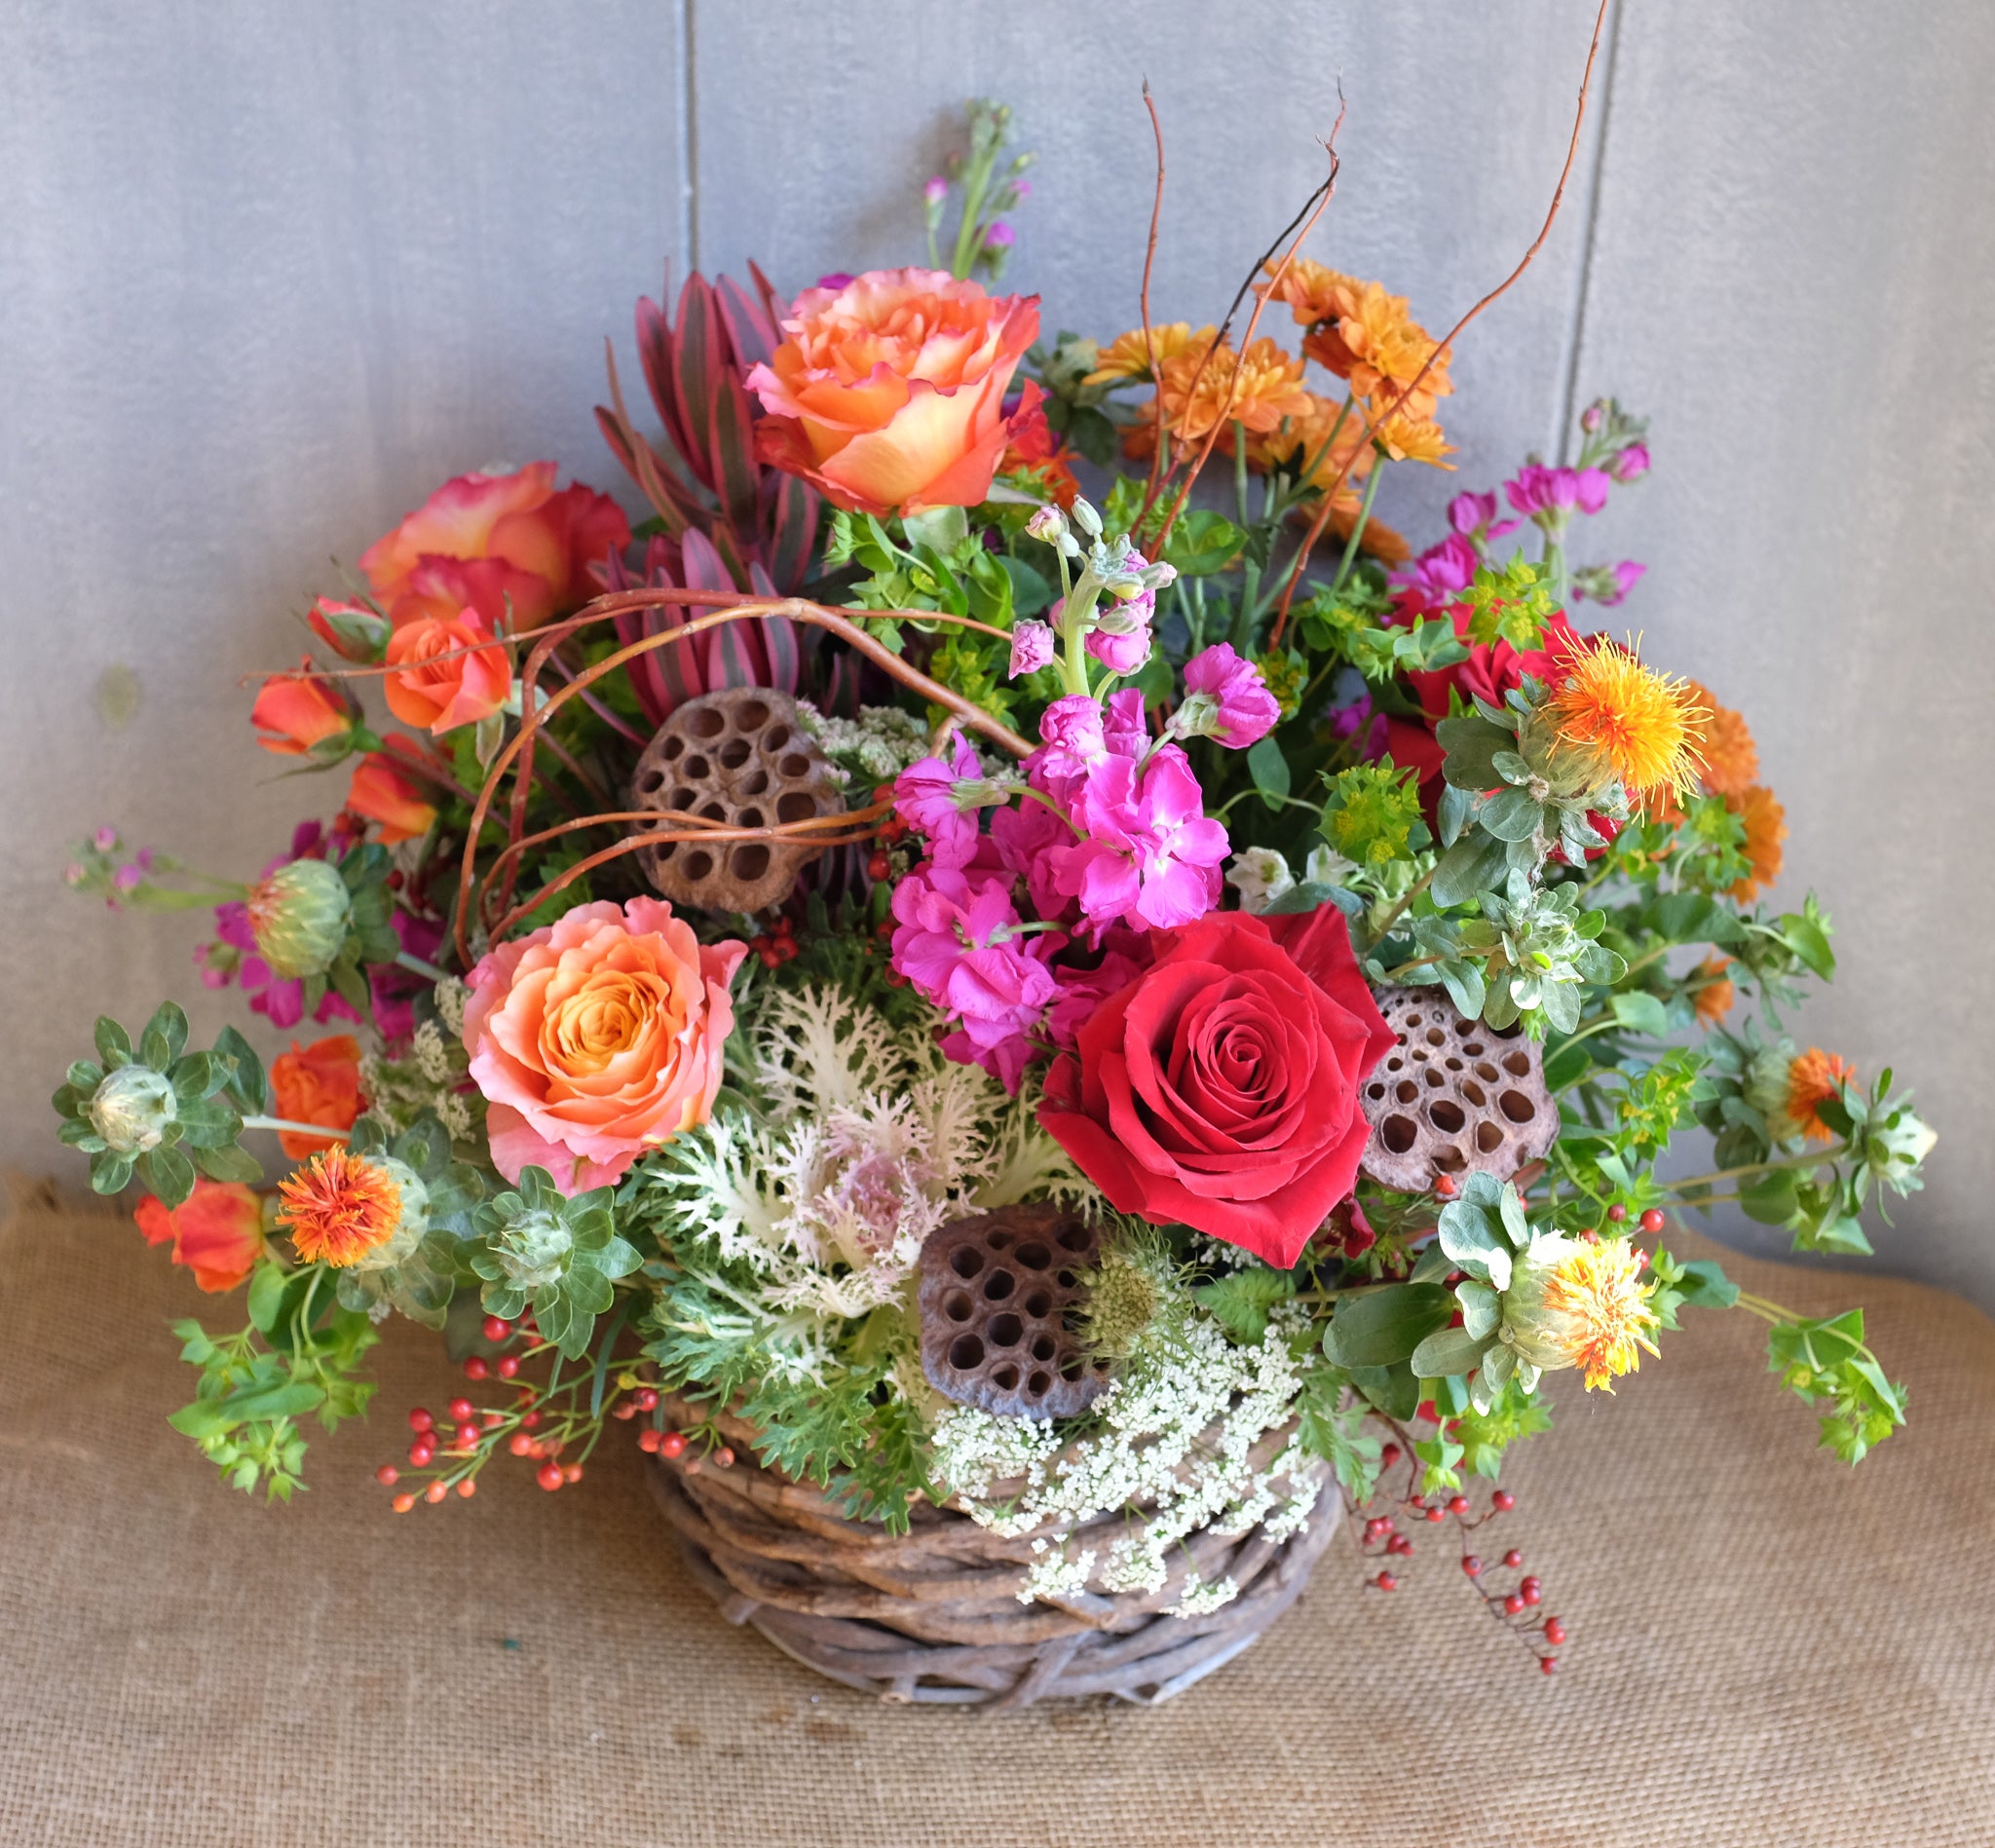 Fall flower basket by Michler's Florist.